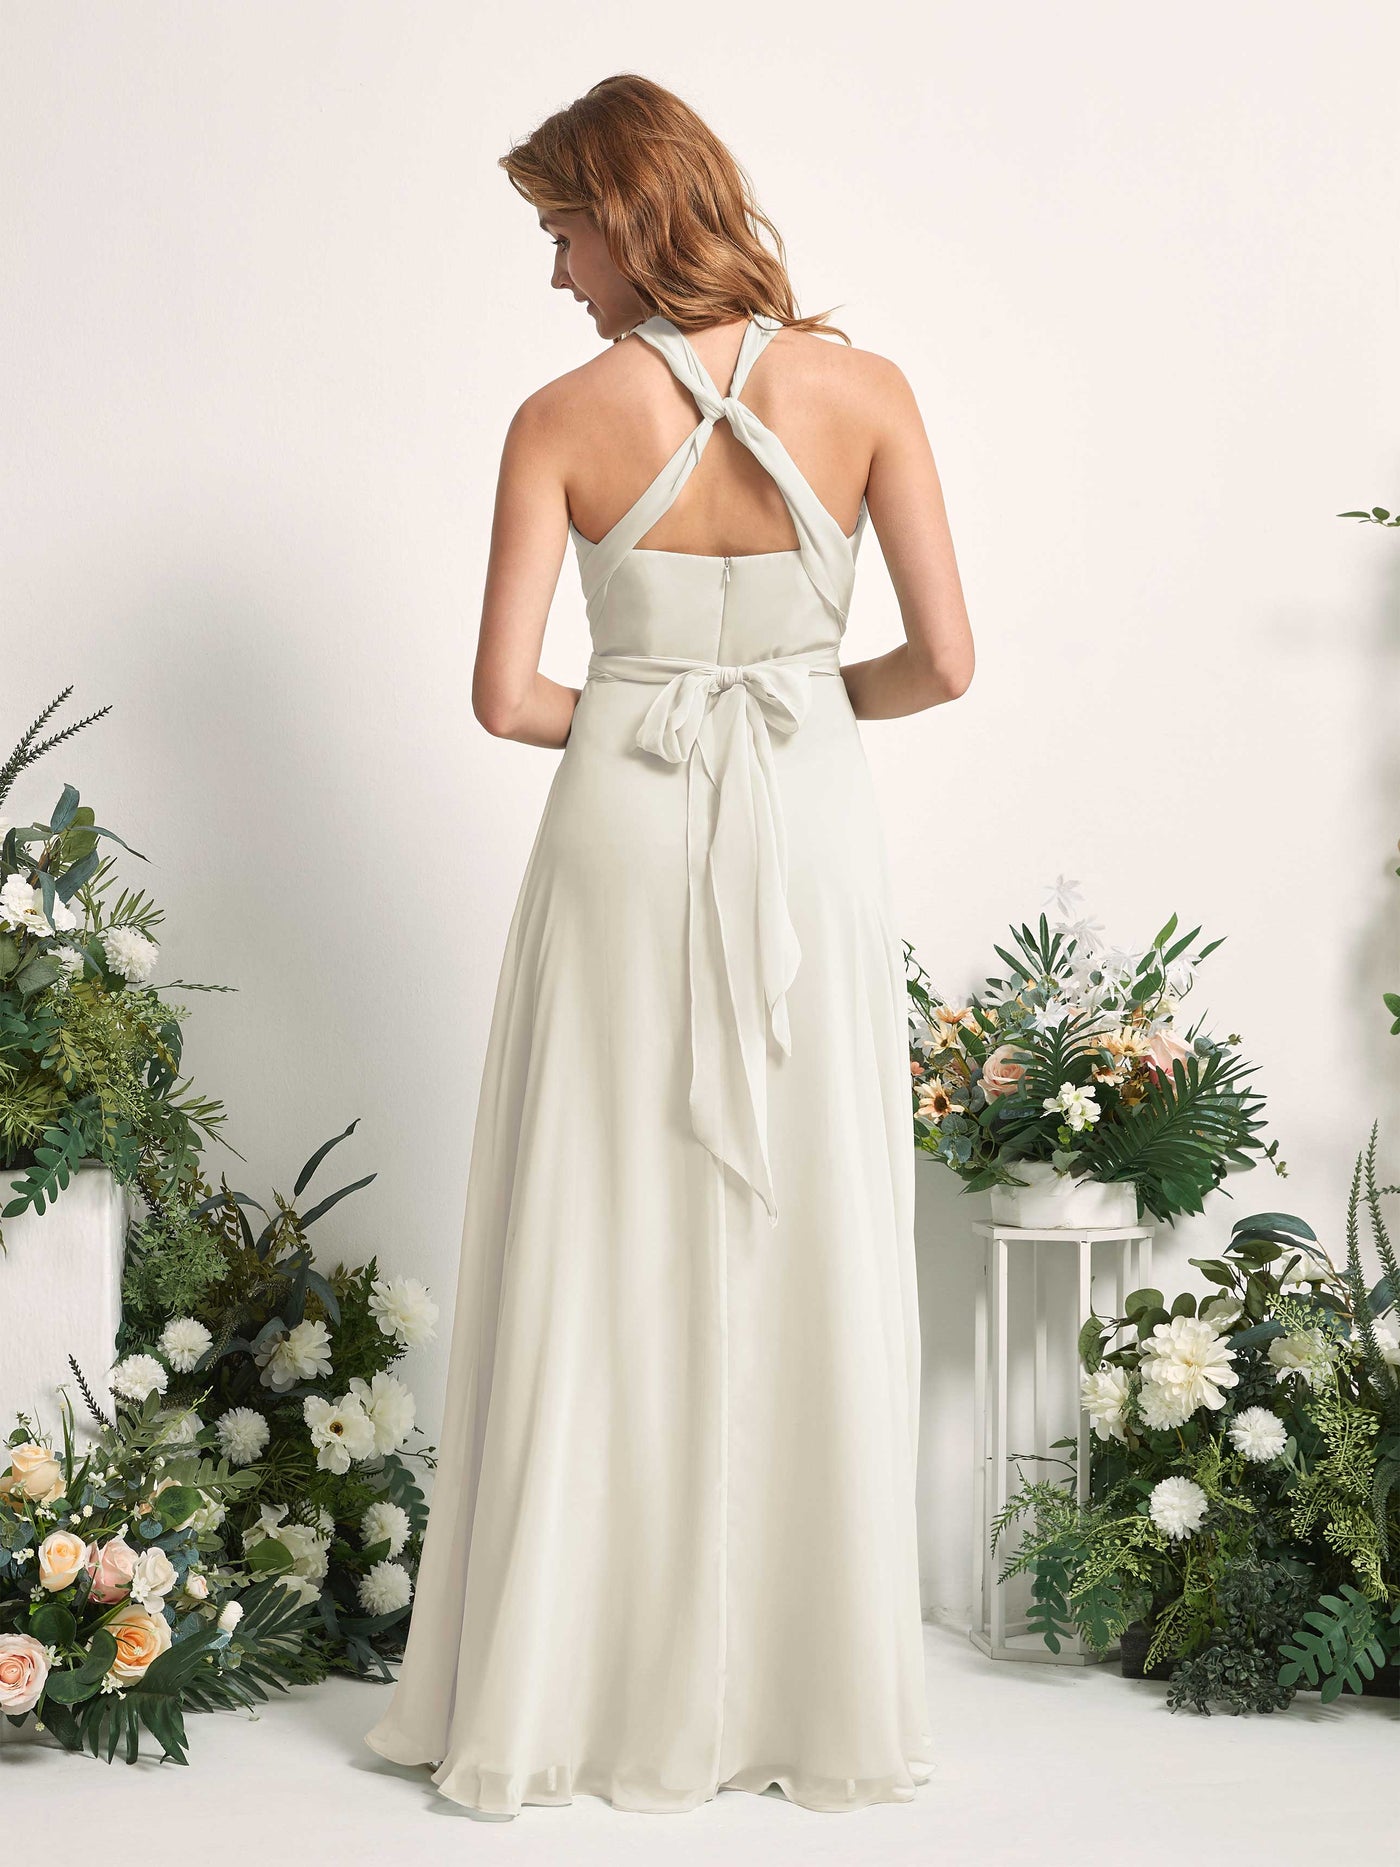 Bridesmaid Dress A-line Chiffon Halter Full Length Short Sleeves Wedding Party Dress - Ivory (81226326)#color_ivory